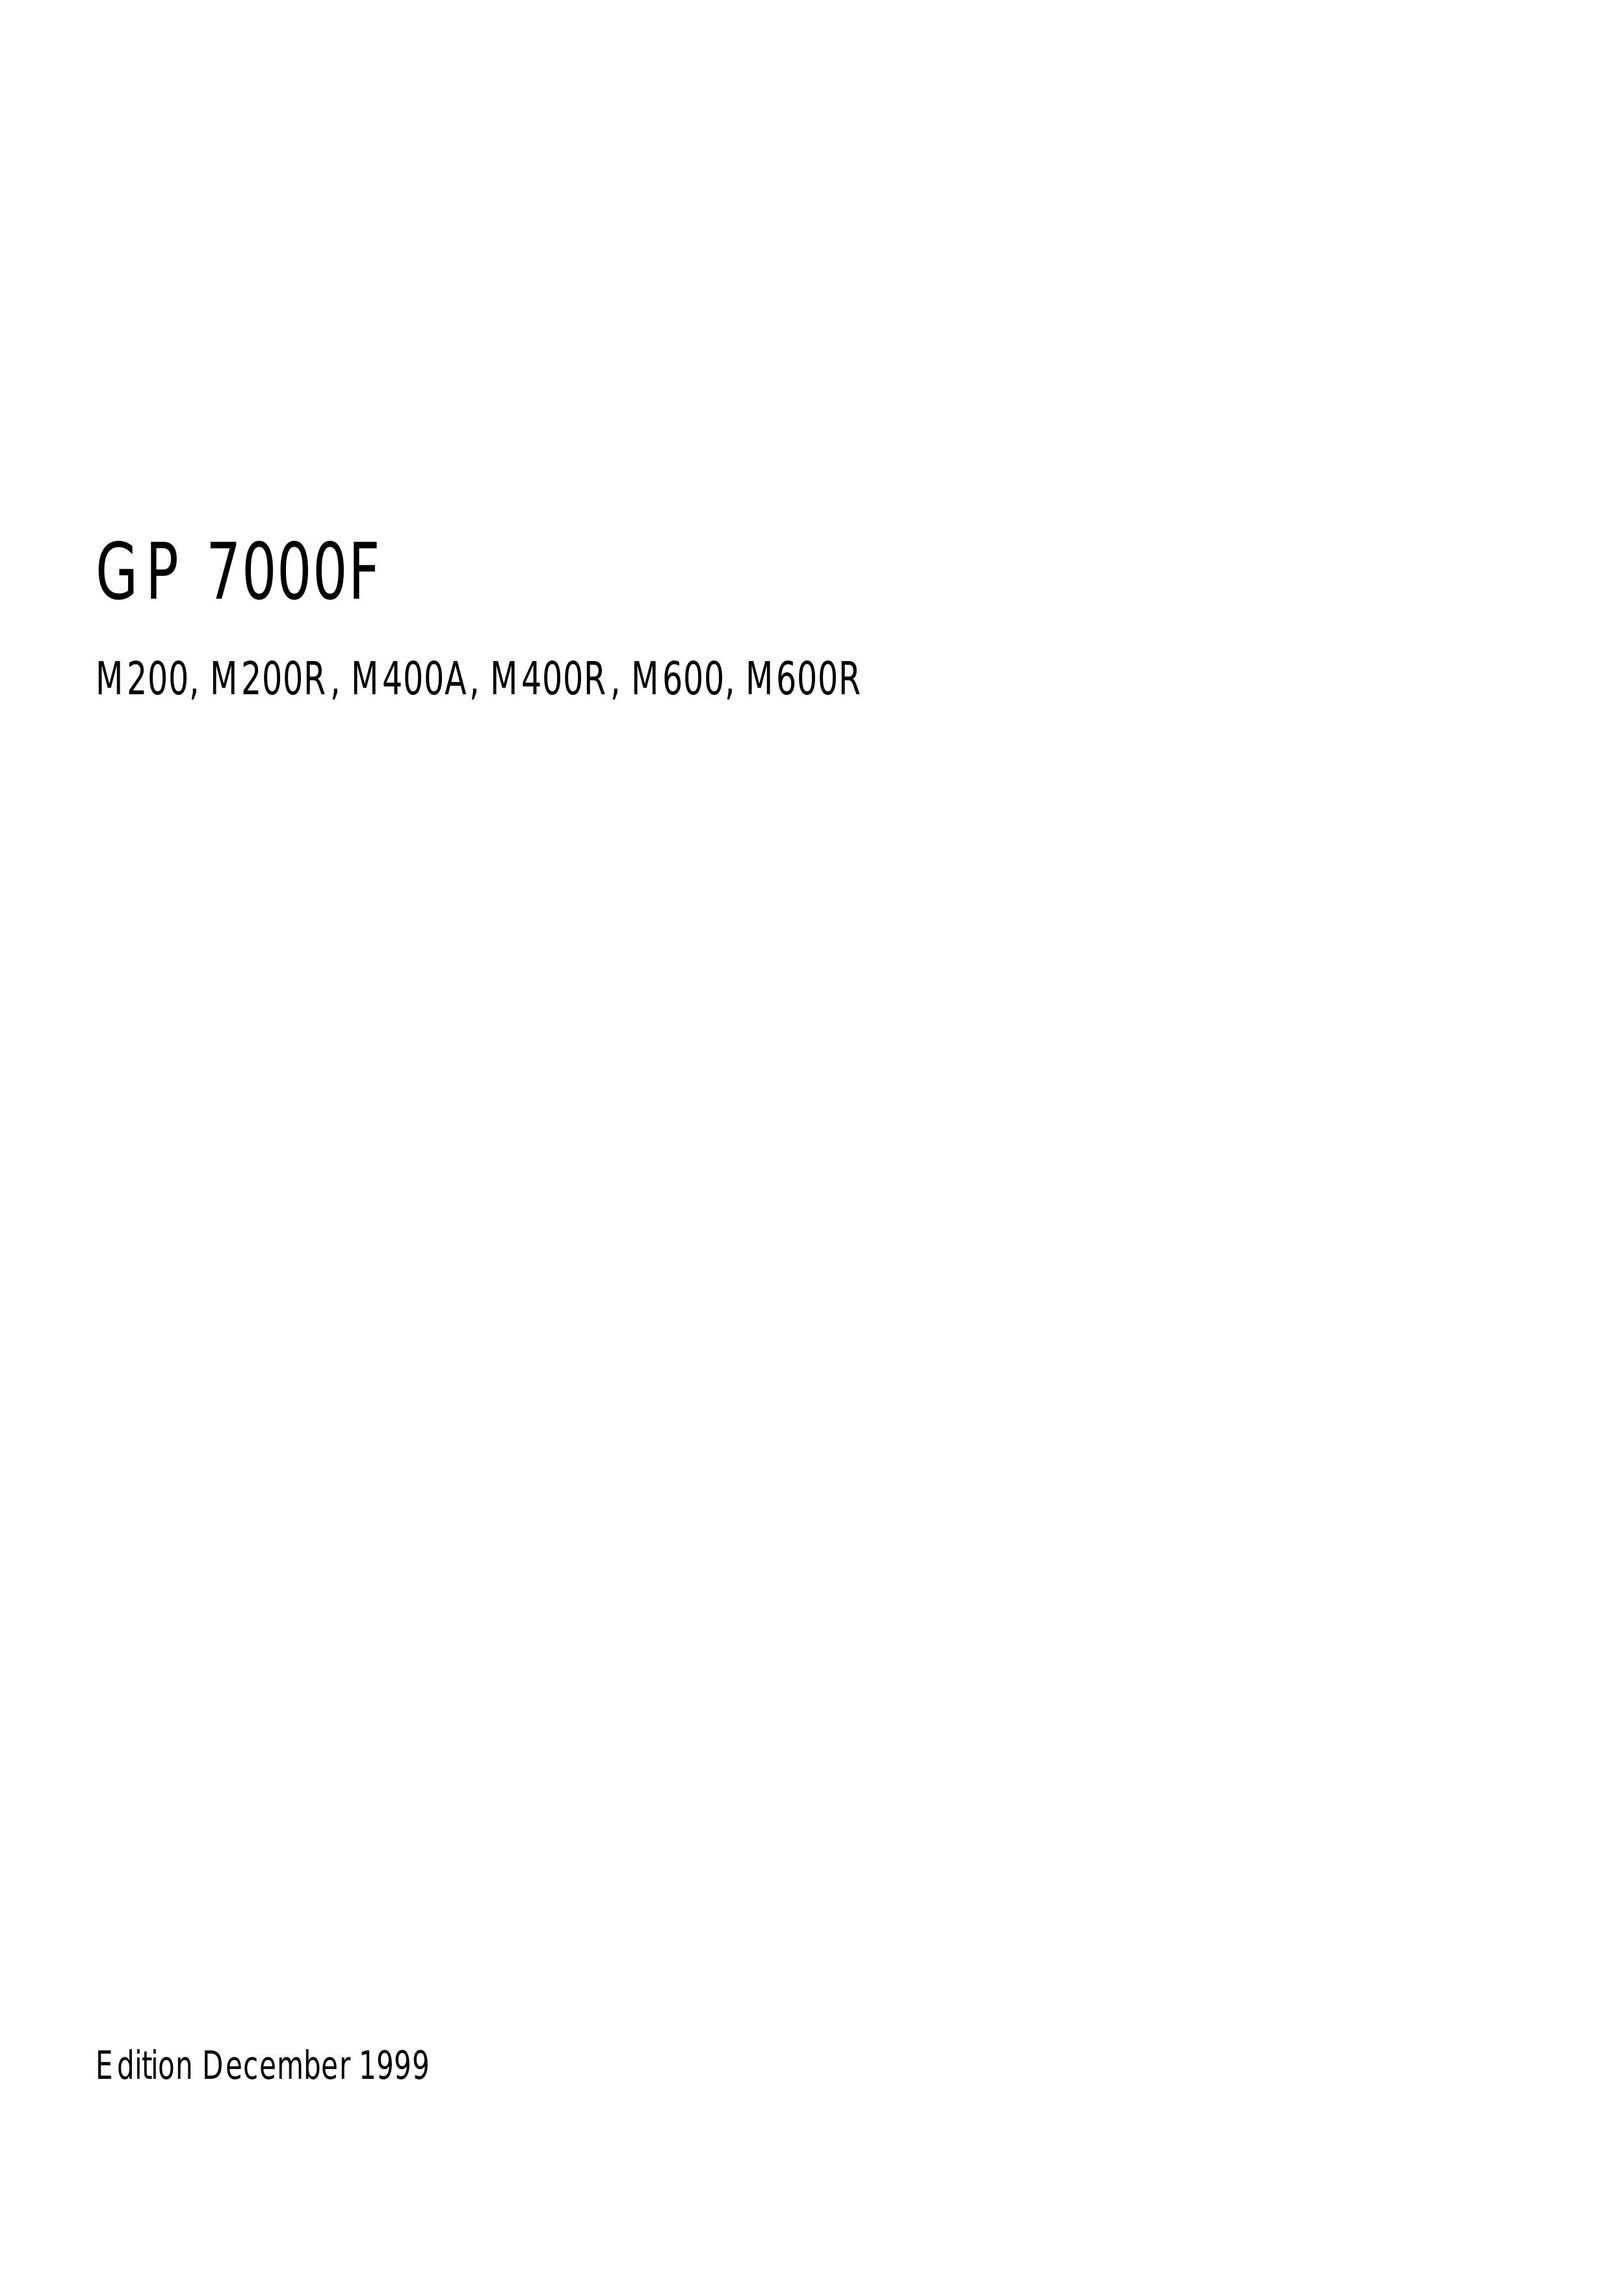 Fujitsu M400A Computer Hardware User Manual